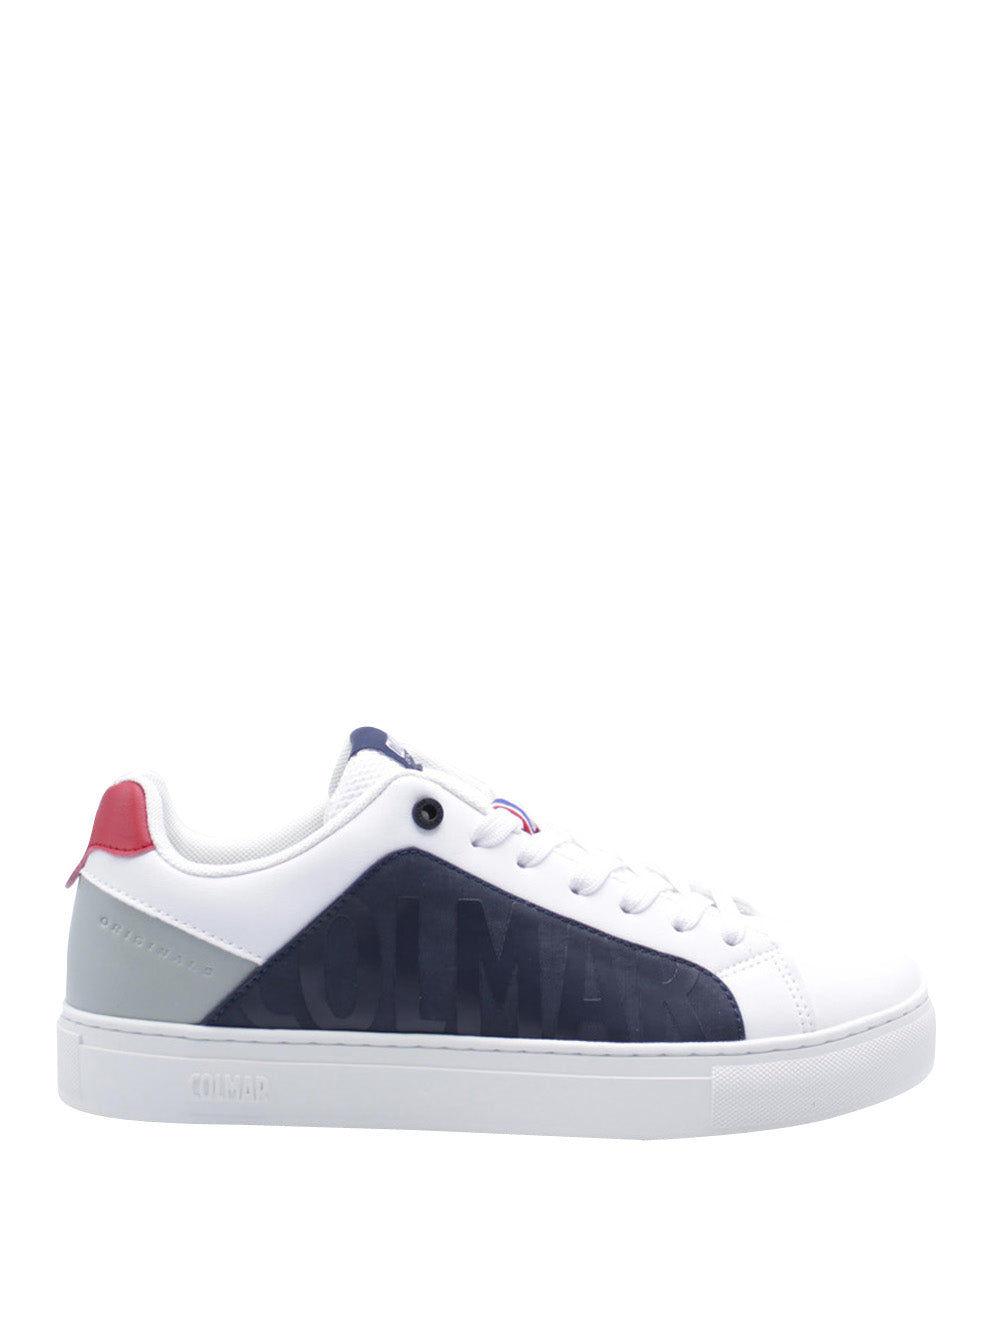 COLMAR Sneakers Uomo - Bianco modello BRADBURYCHROMATIC